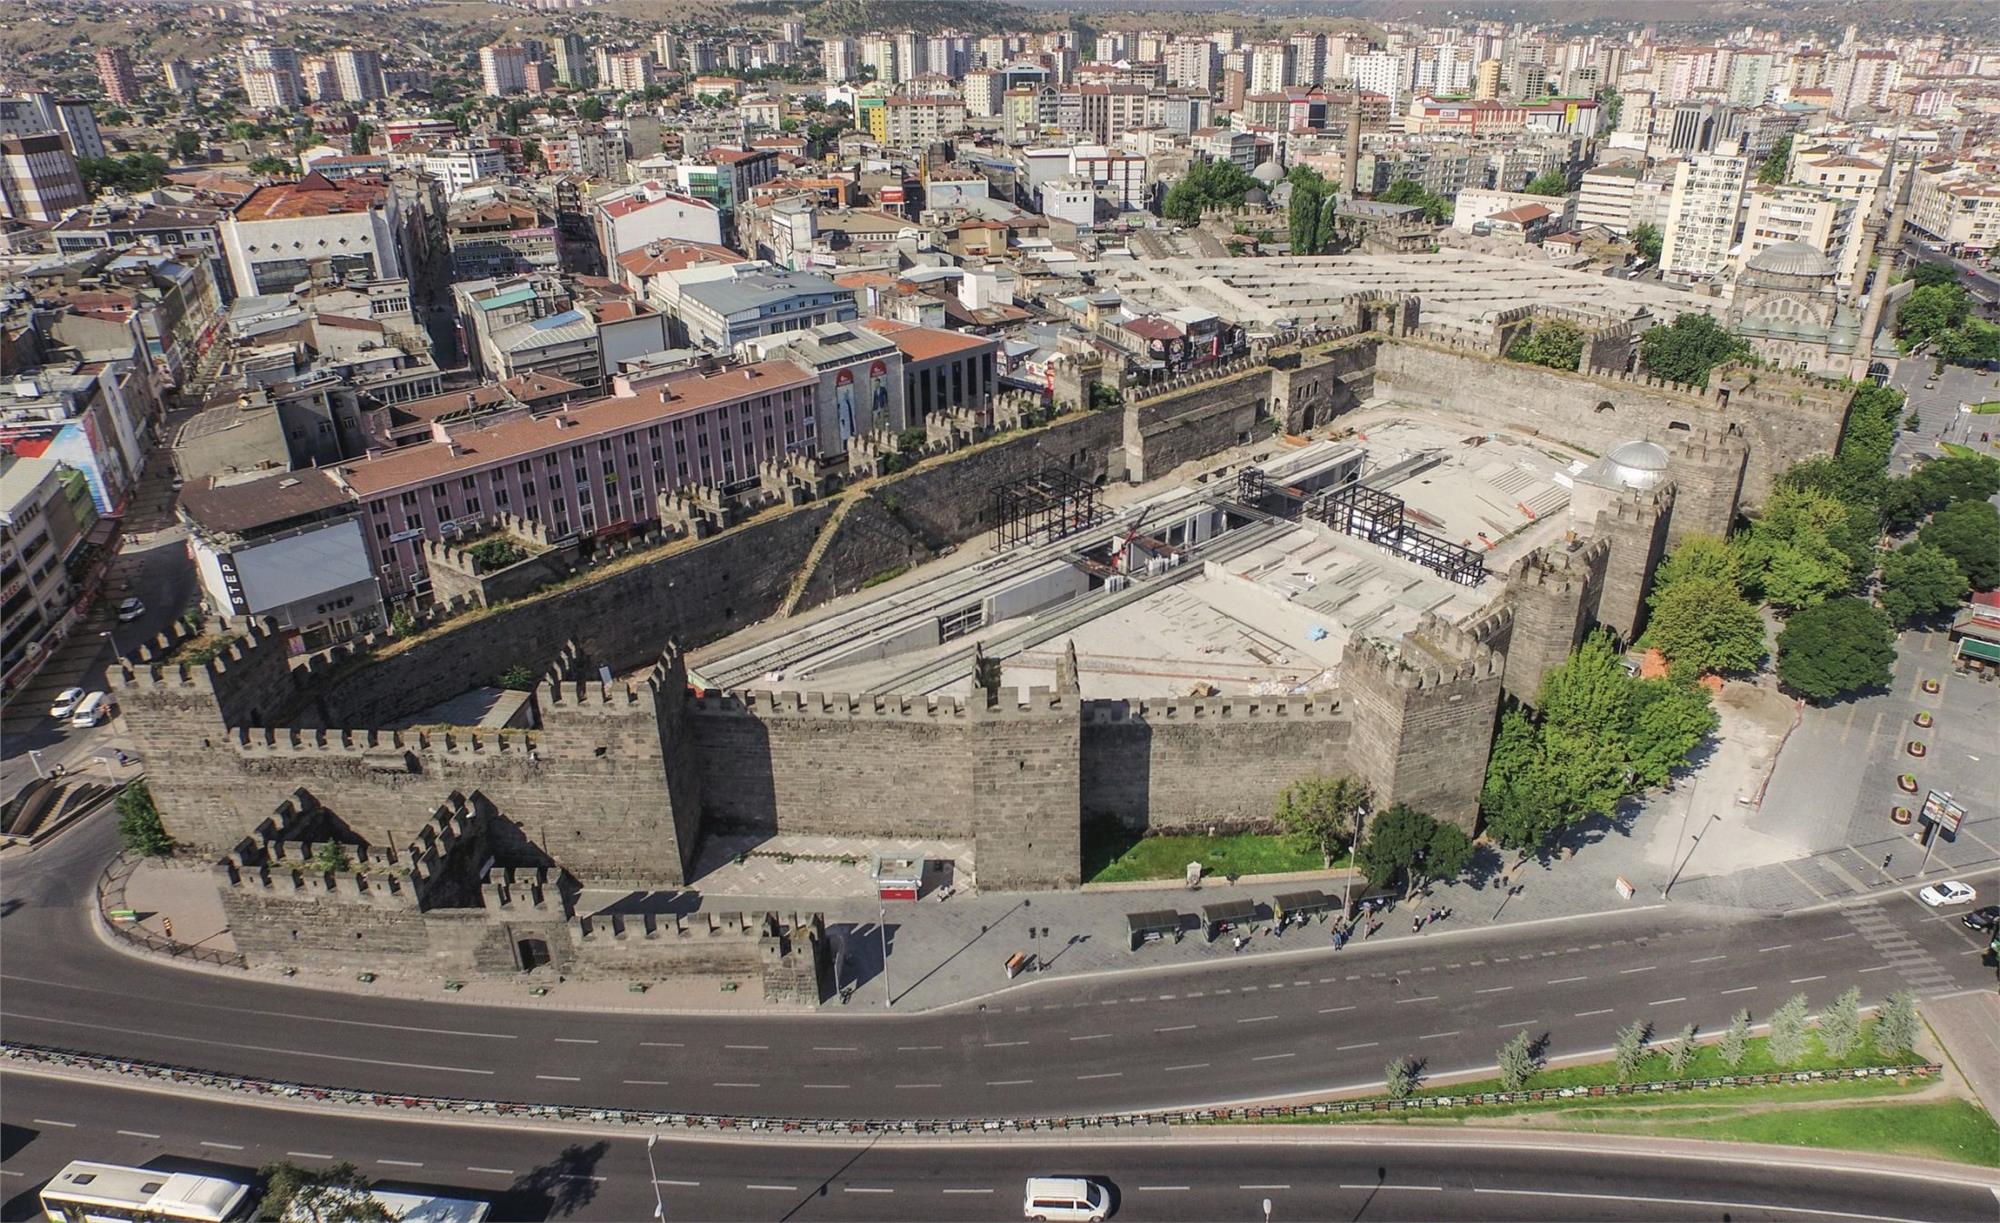 Kayseri Castle and Walls